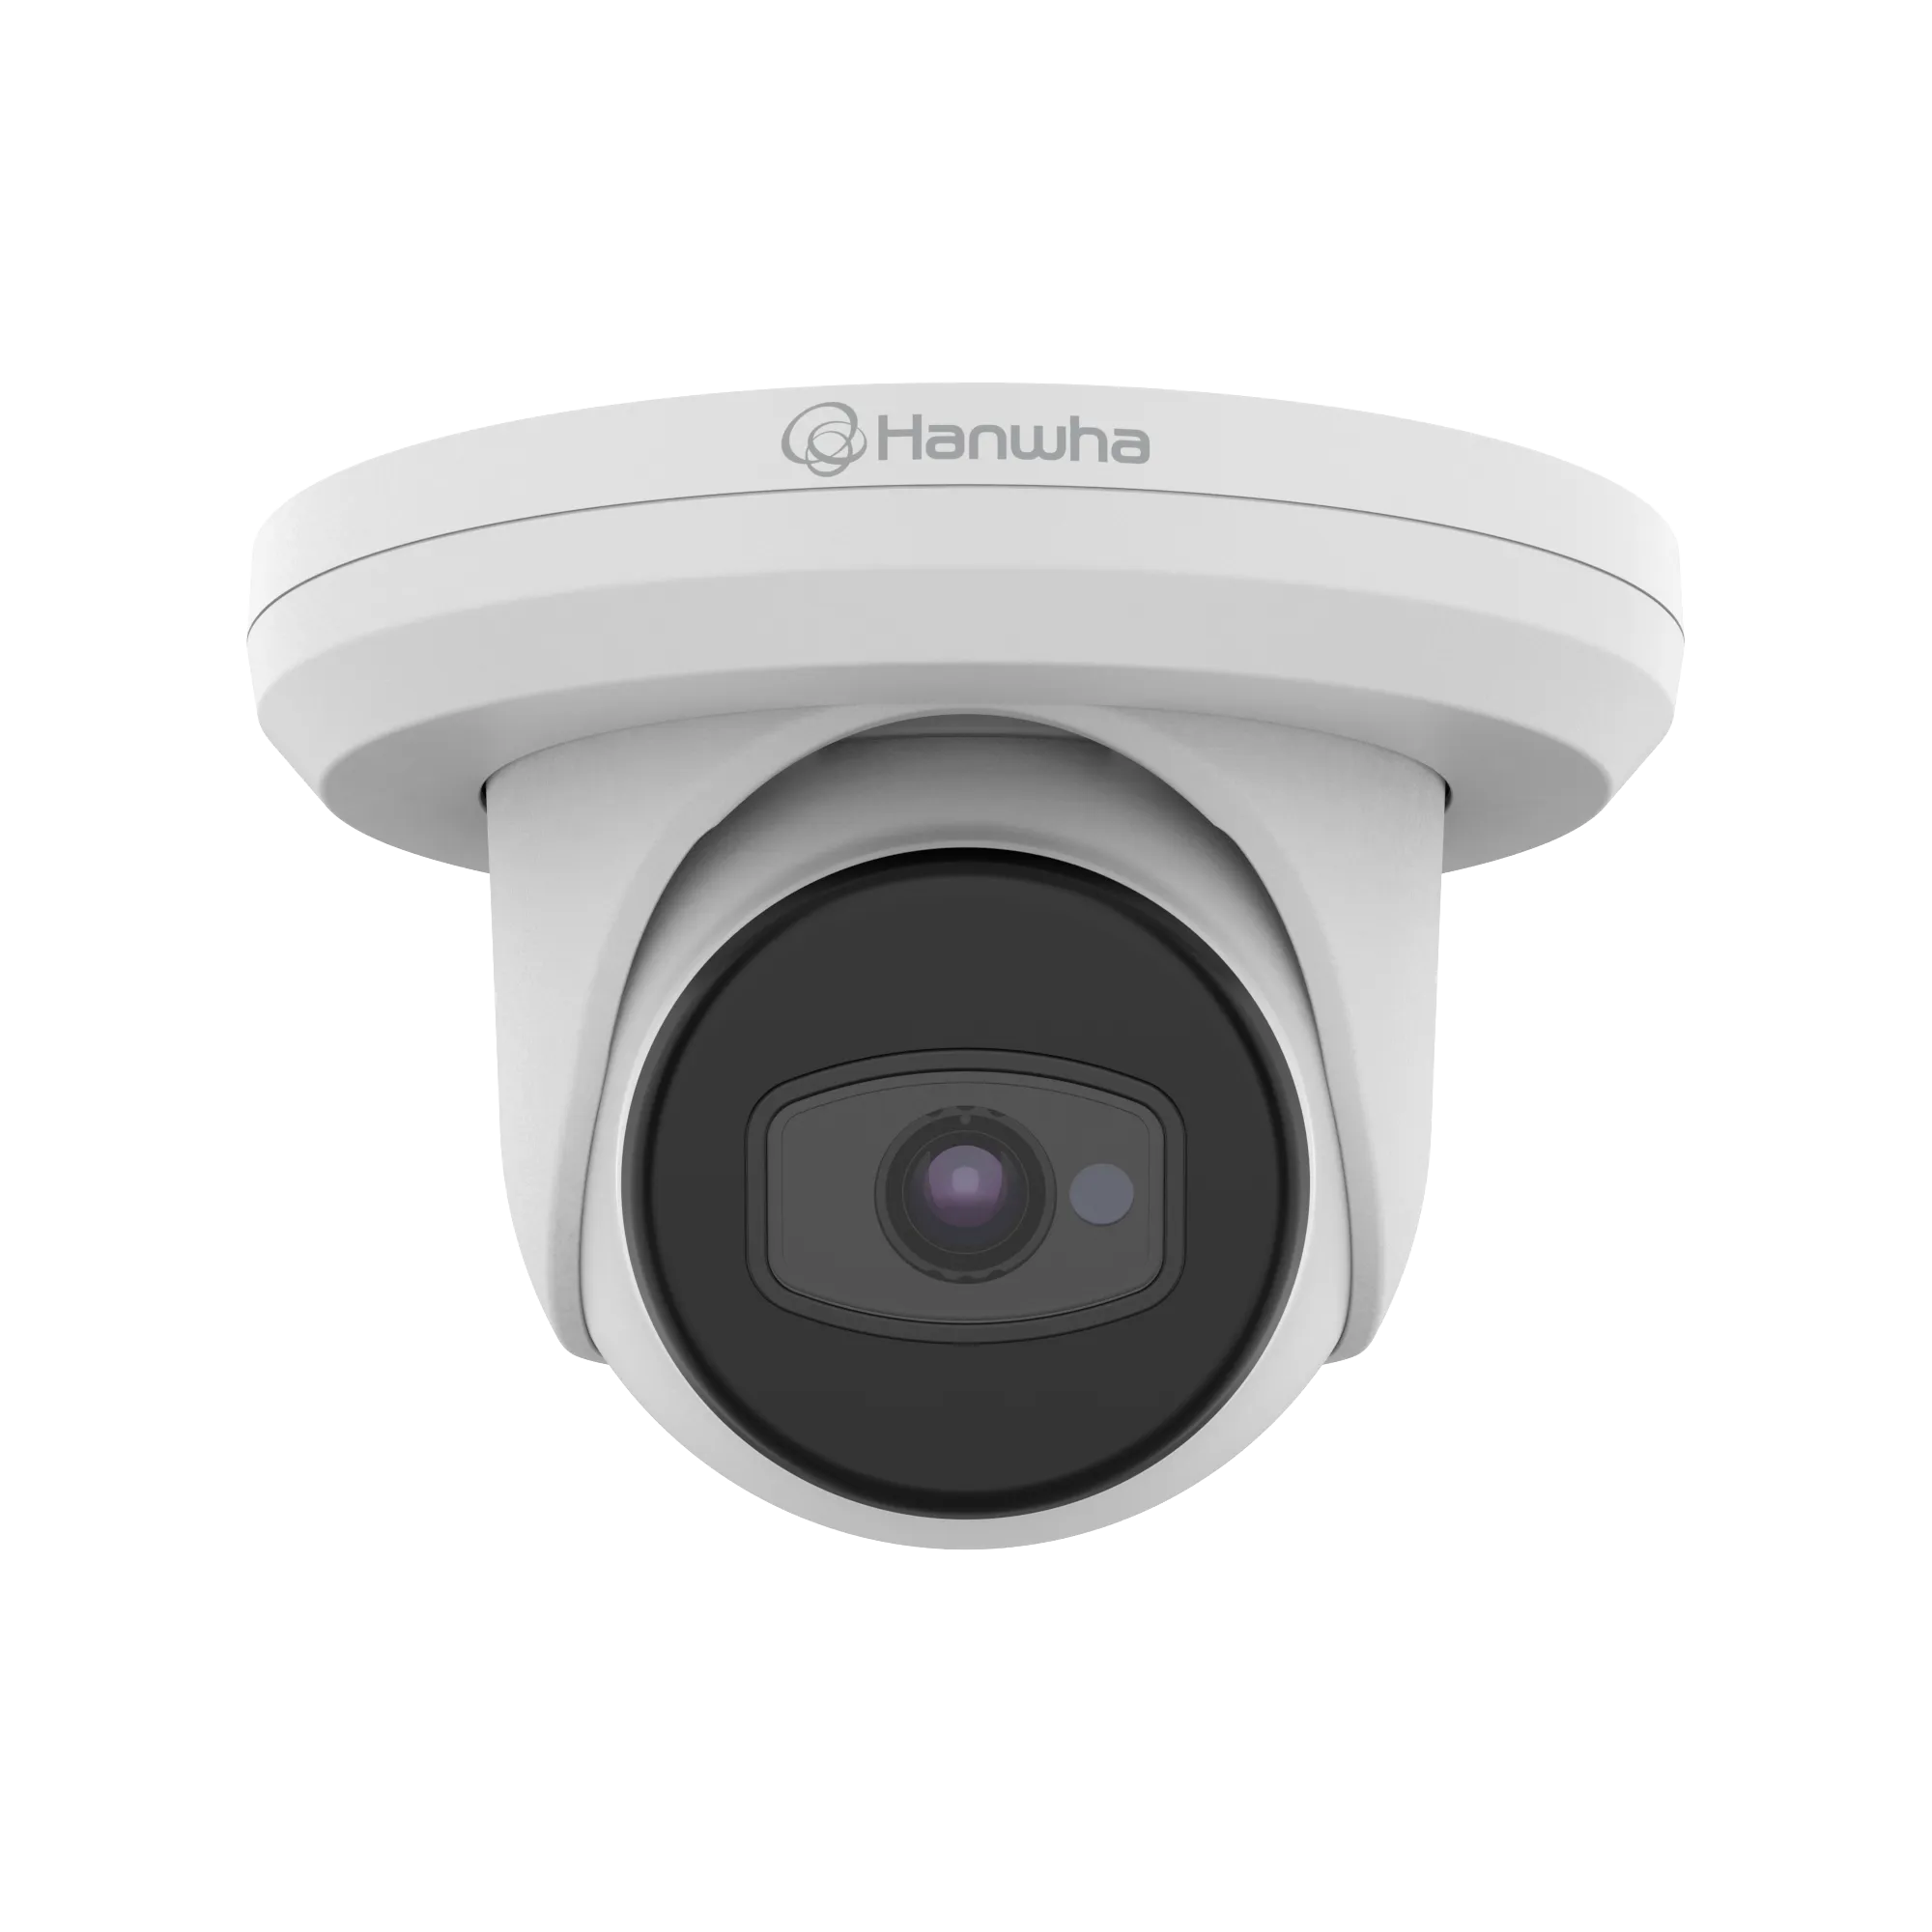 Hanwha ACE-8020R 5MP Analog HD Flateye Camera